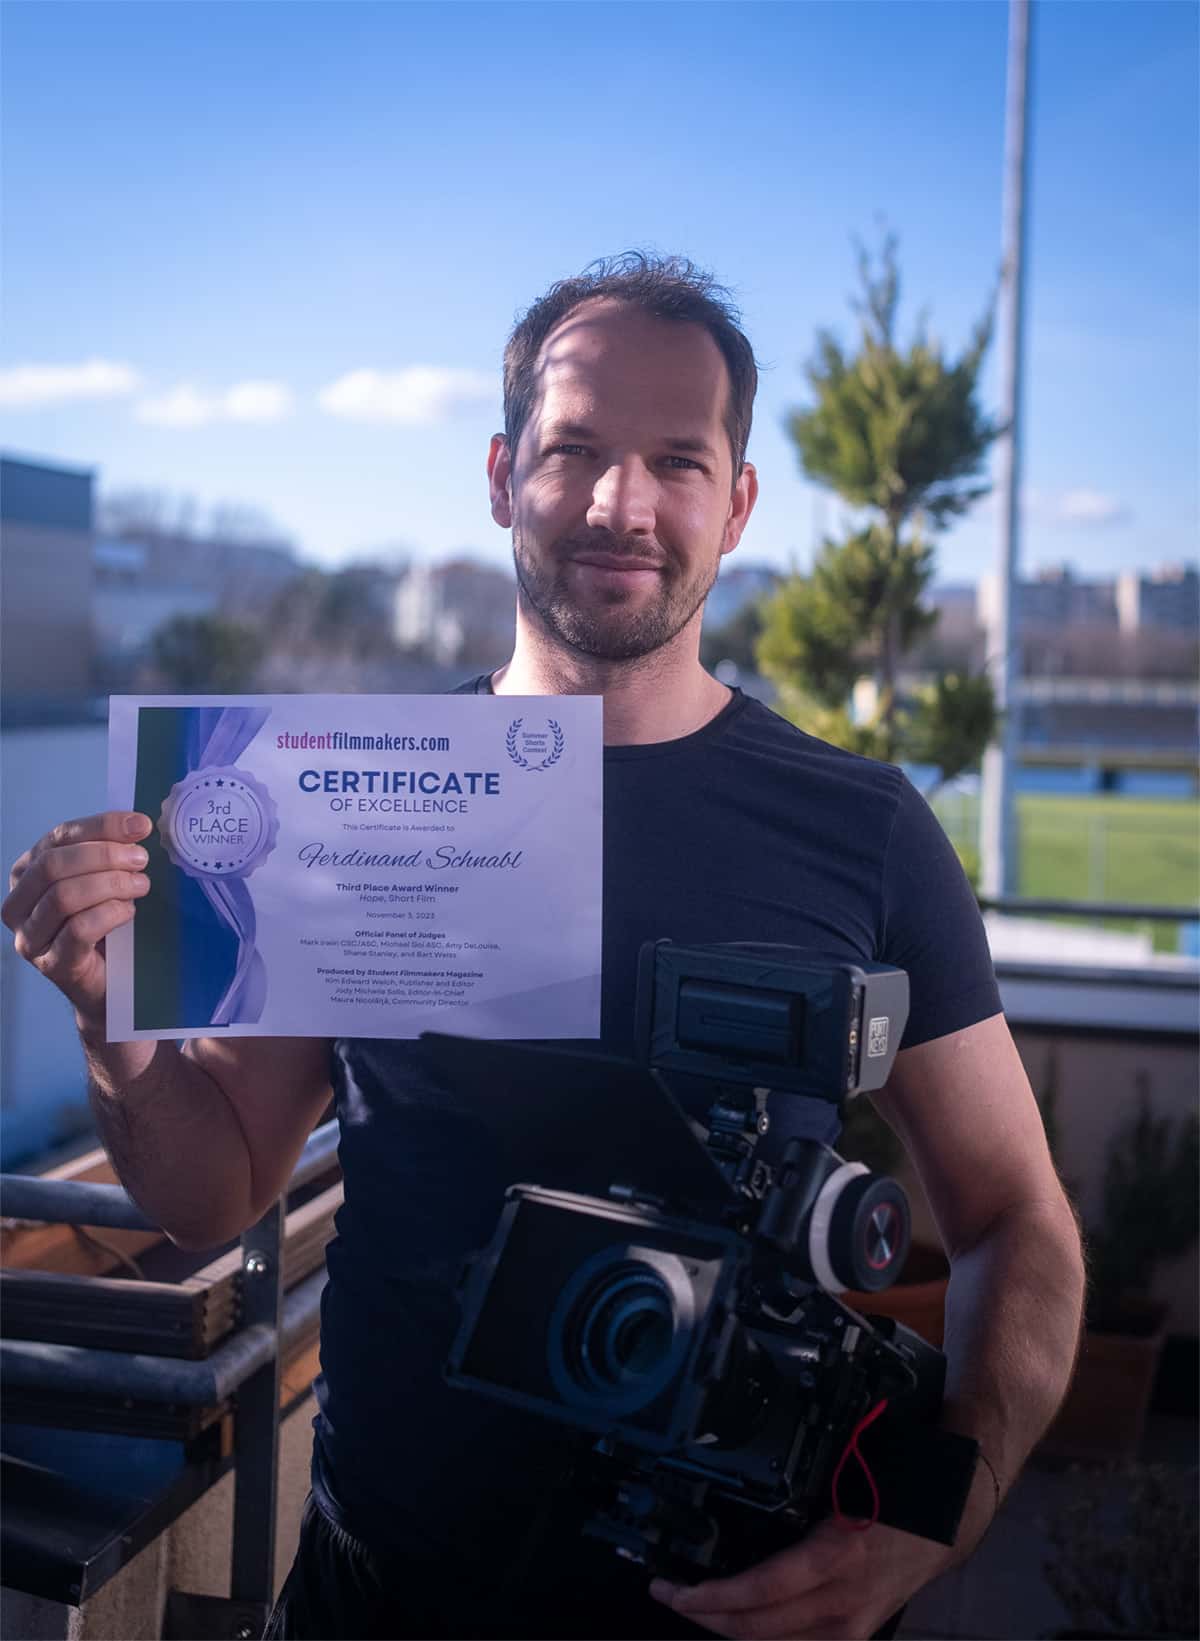 Ferdinand Schnabl Recognized Among Top Talent in StudentFilmmakers Video Contest